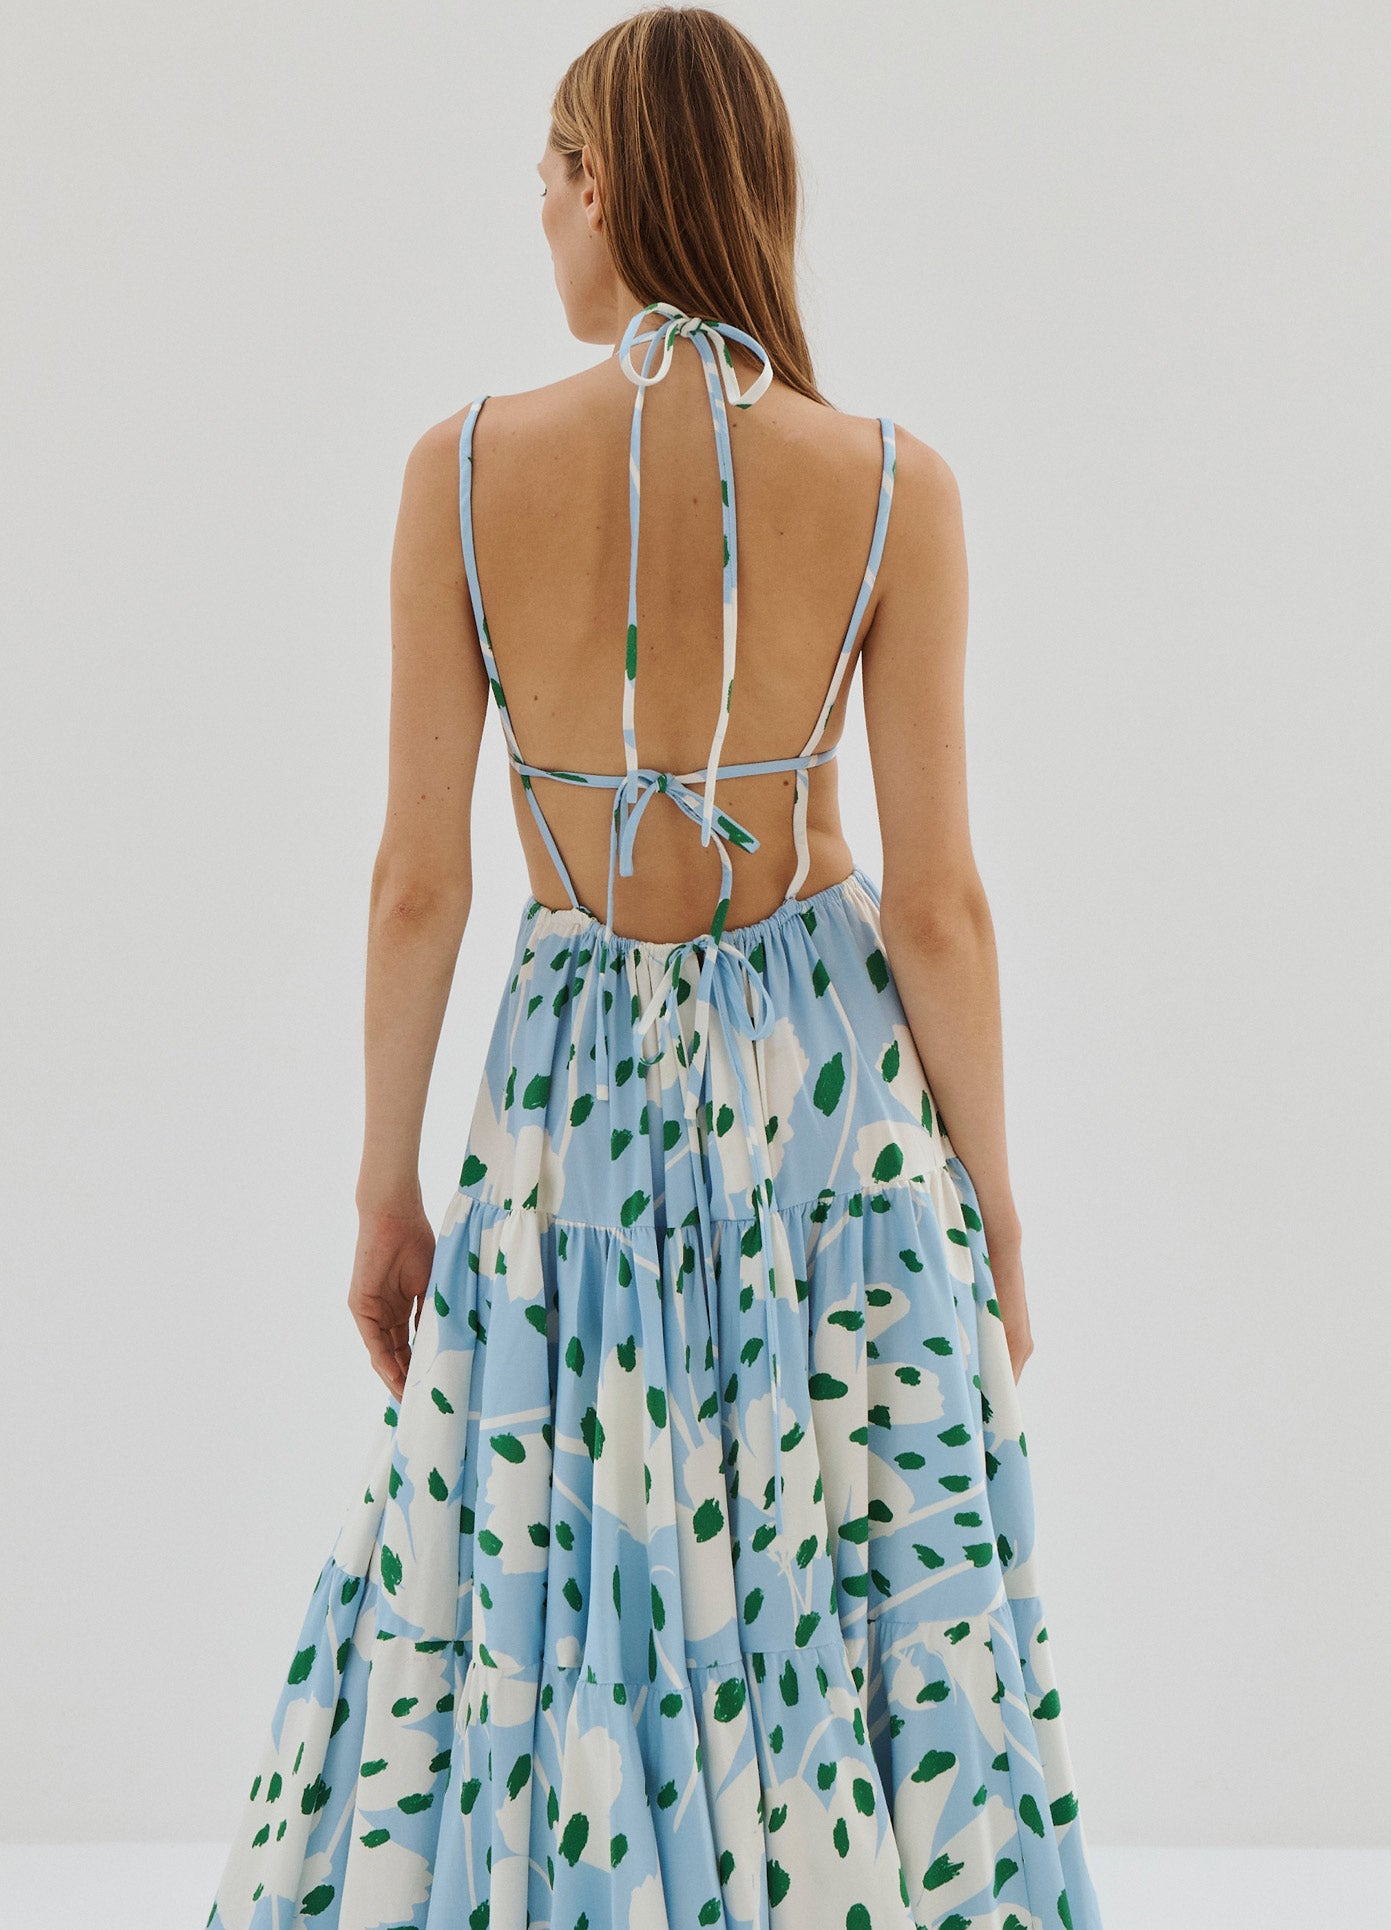 MONSE Floral Print Bra Detail Maxi Dress in Light Blue Multi on Model Back View